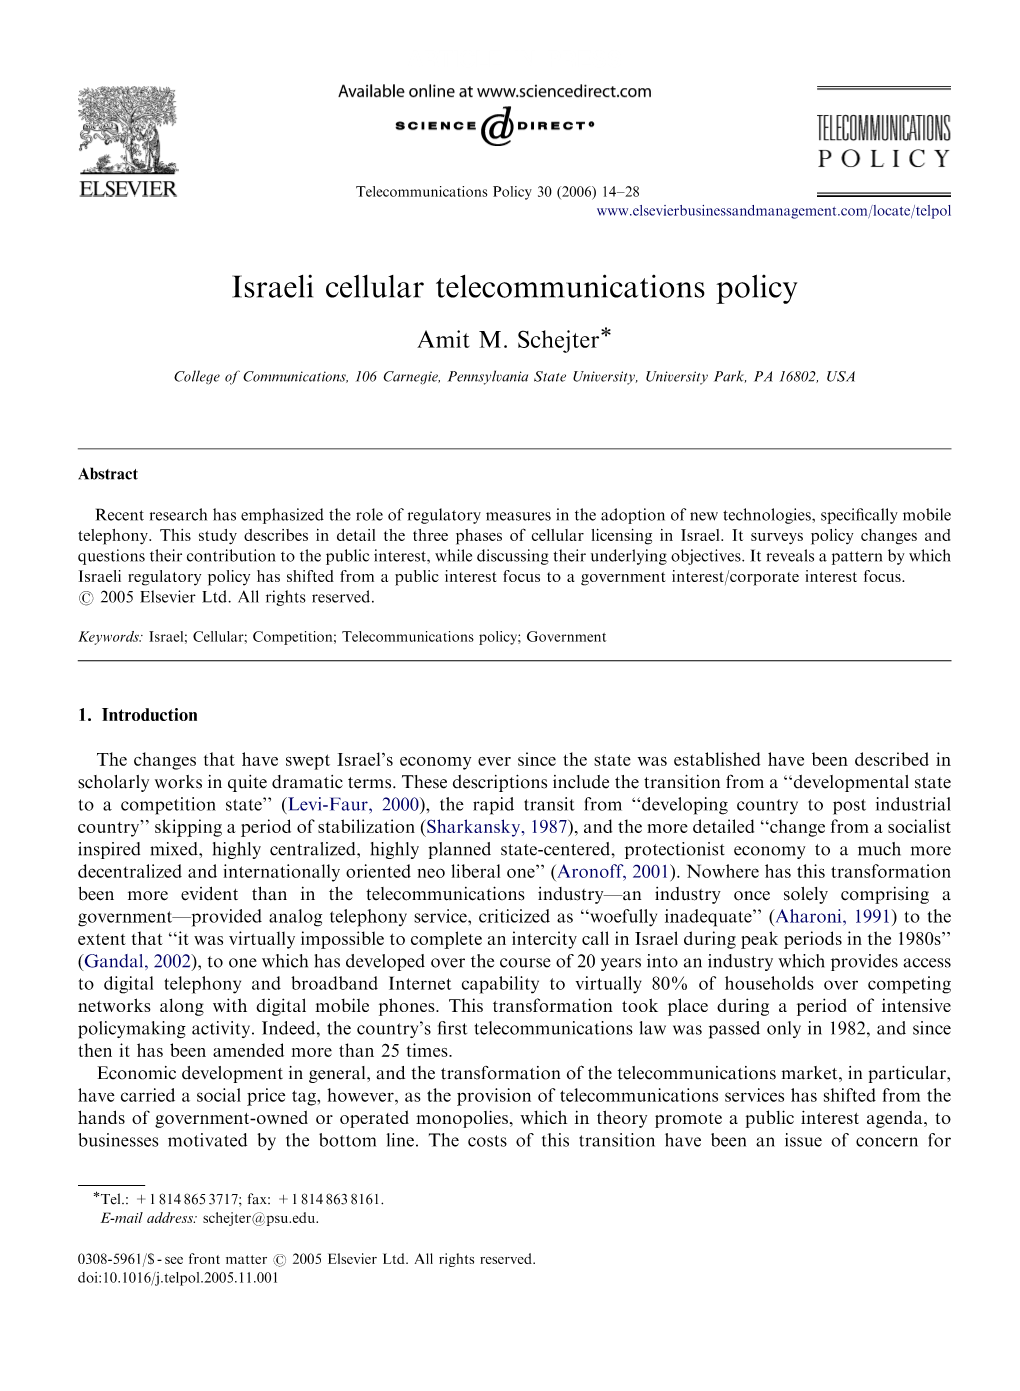 Israeli Cellular Telecommunications Policy